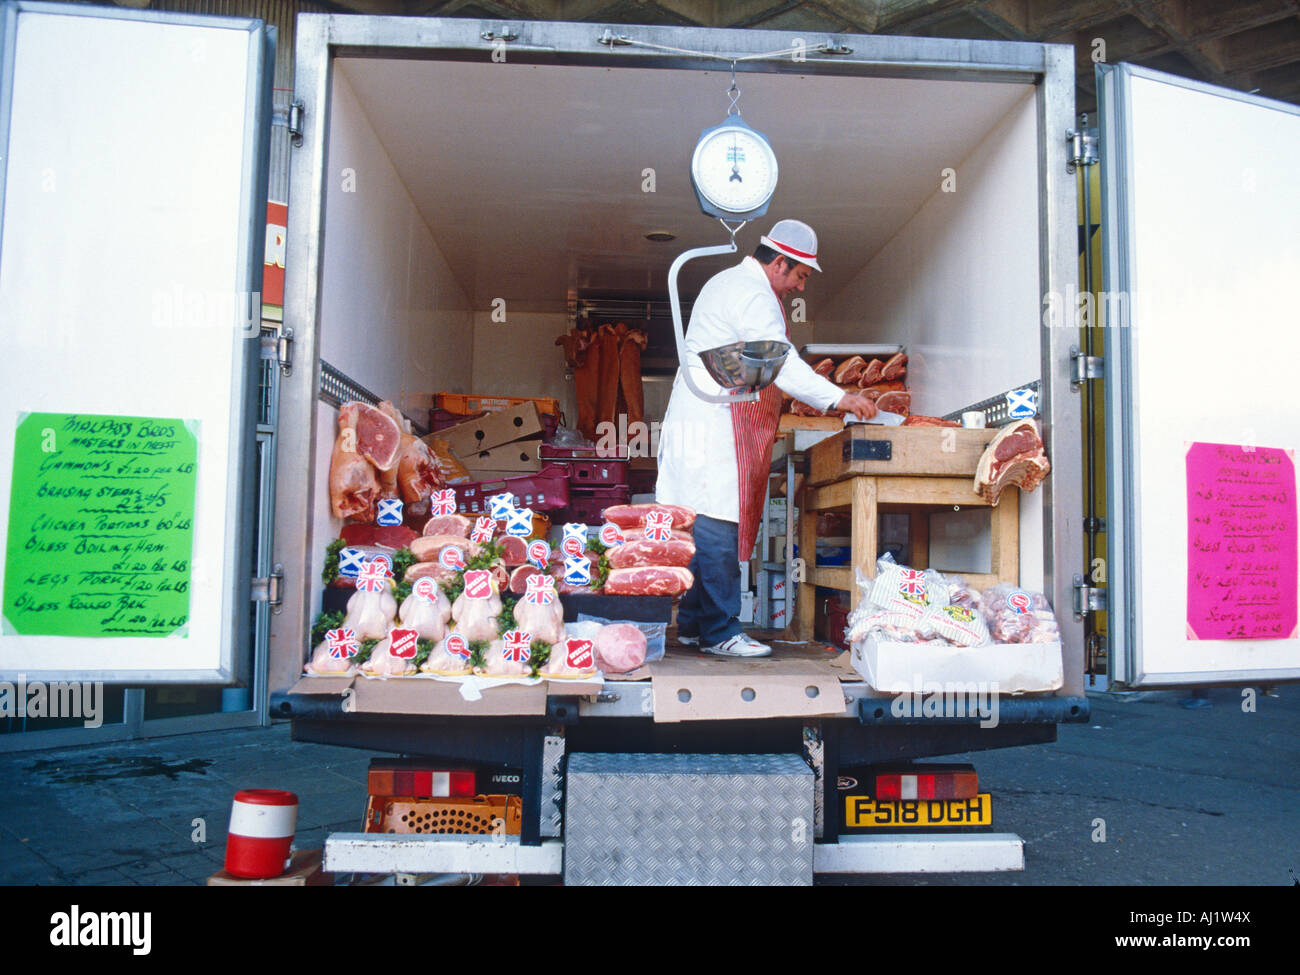 street market butcher selling from van 